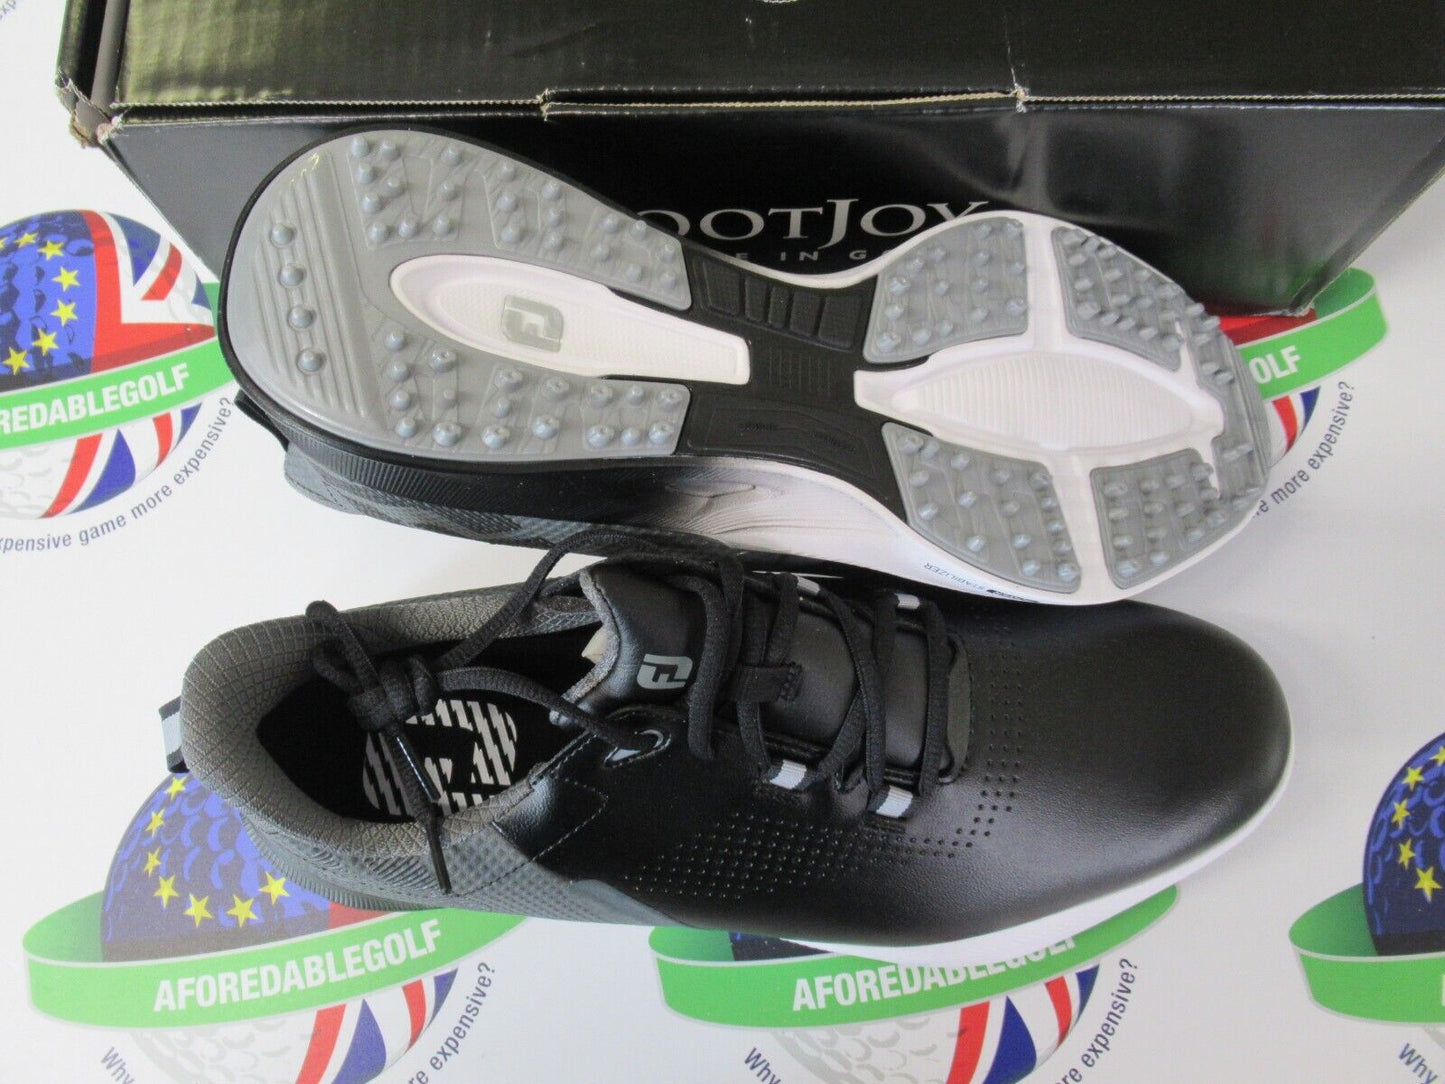 footjoy fj fuel waterproof golf shoes 55451k black/grey uk size 10 medium